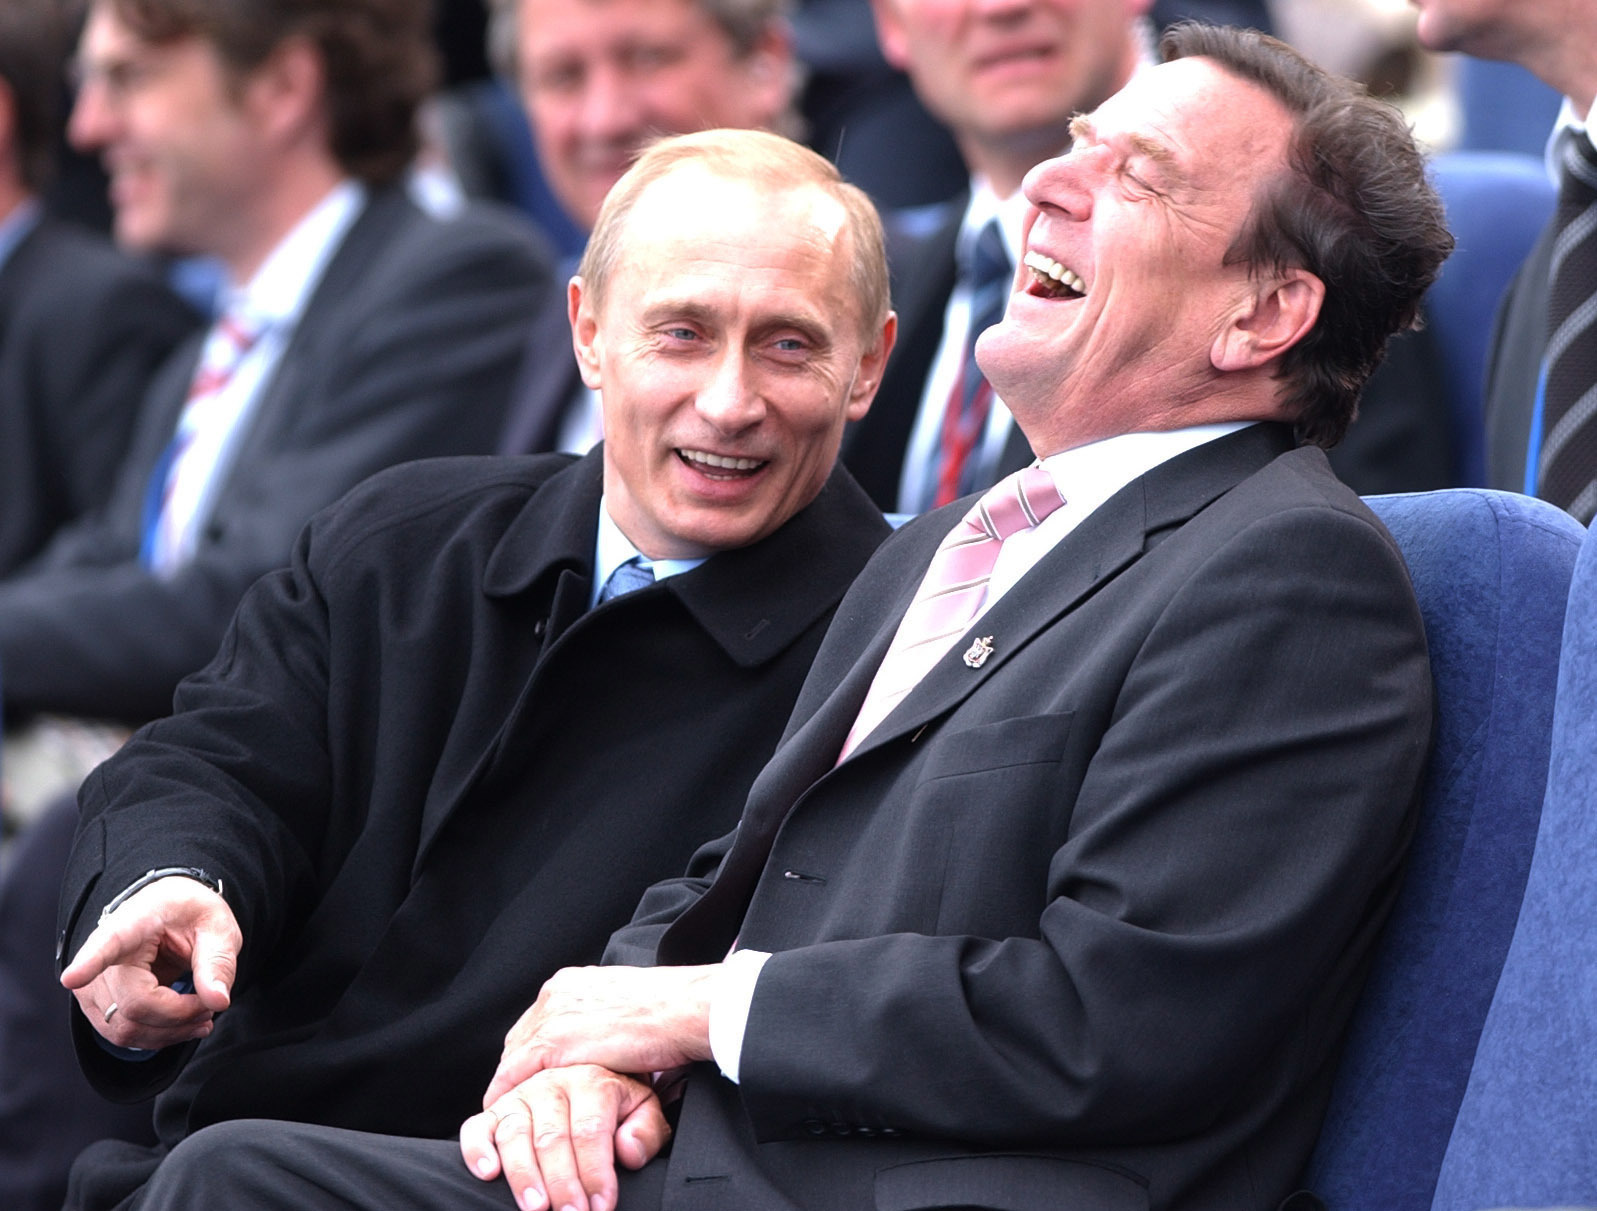 Vladimir Putin conversa animadamente con Gerhard Schröder durante un festival en San Petersburgo.